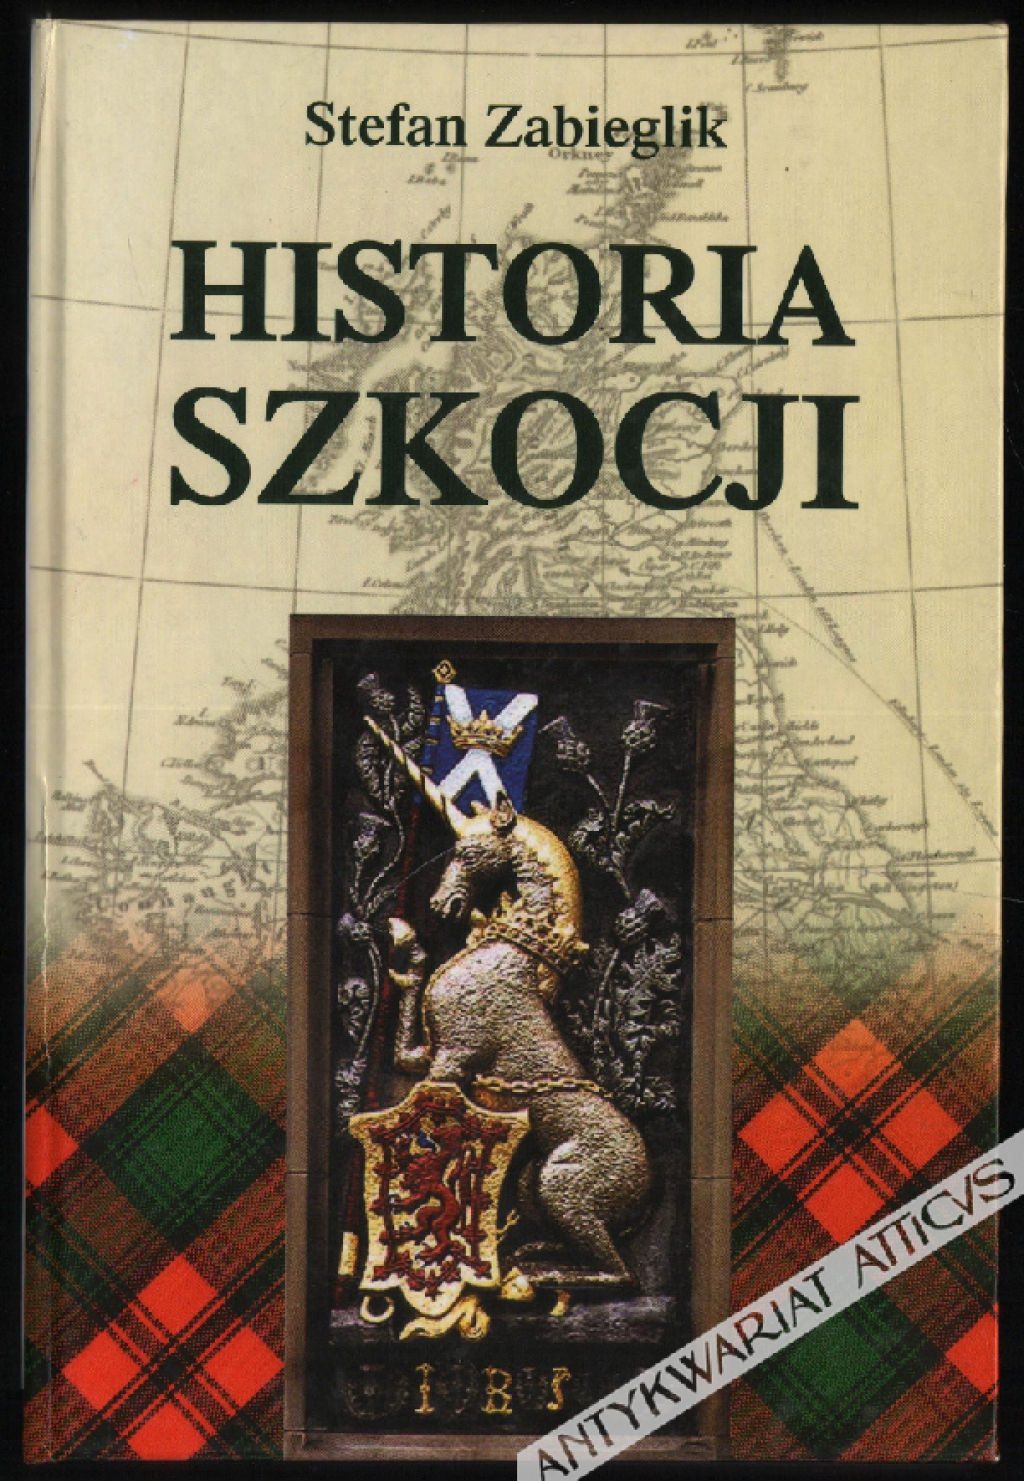 Historia Szkocji